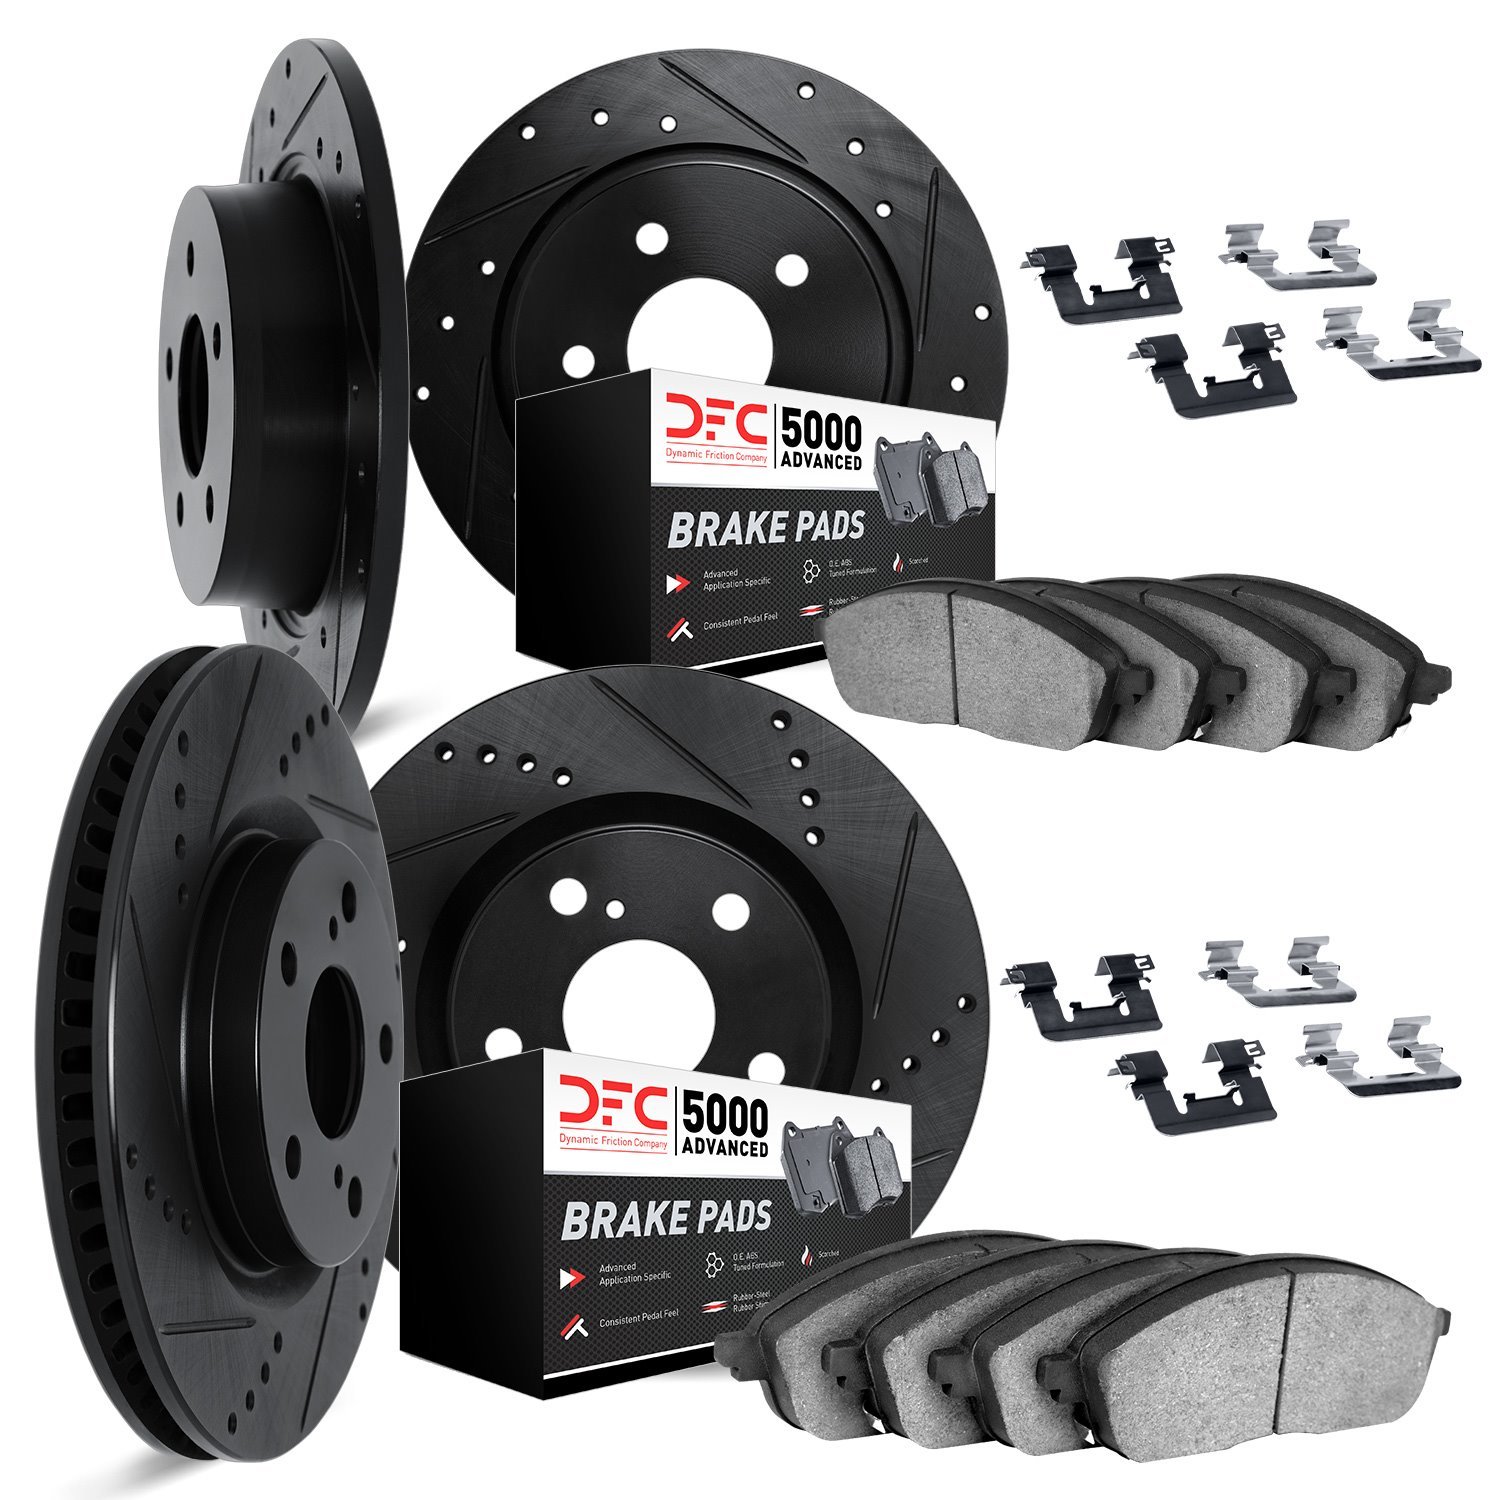 8514-67110 Drilled/Slotted Brake Rotors w/5000 Advanced Brake Pads Kit & Hardware [Black], 1999-2000 Infiniti/Nissan, Position: